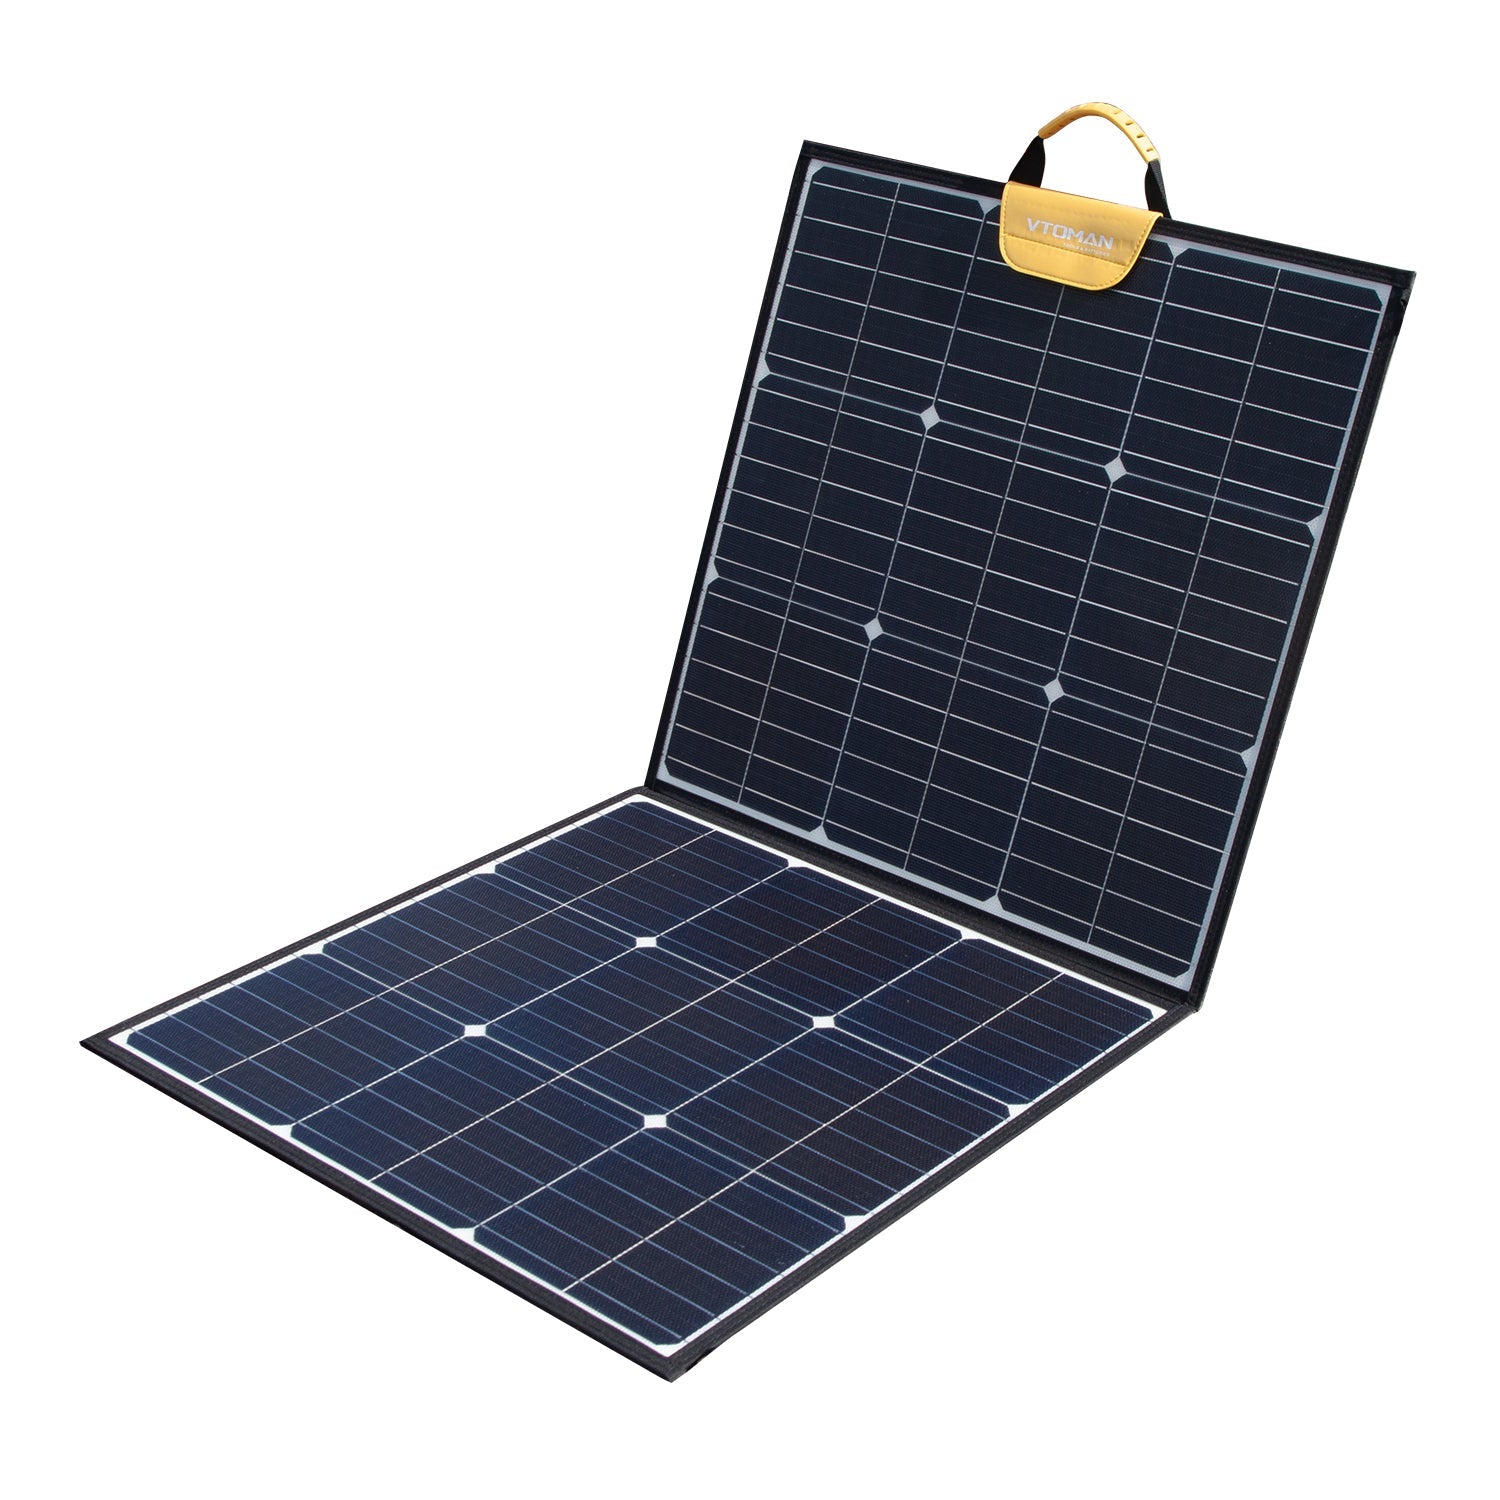 100w solar panel